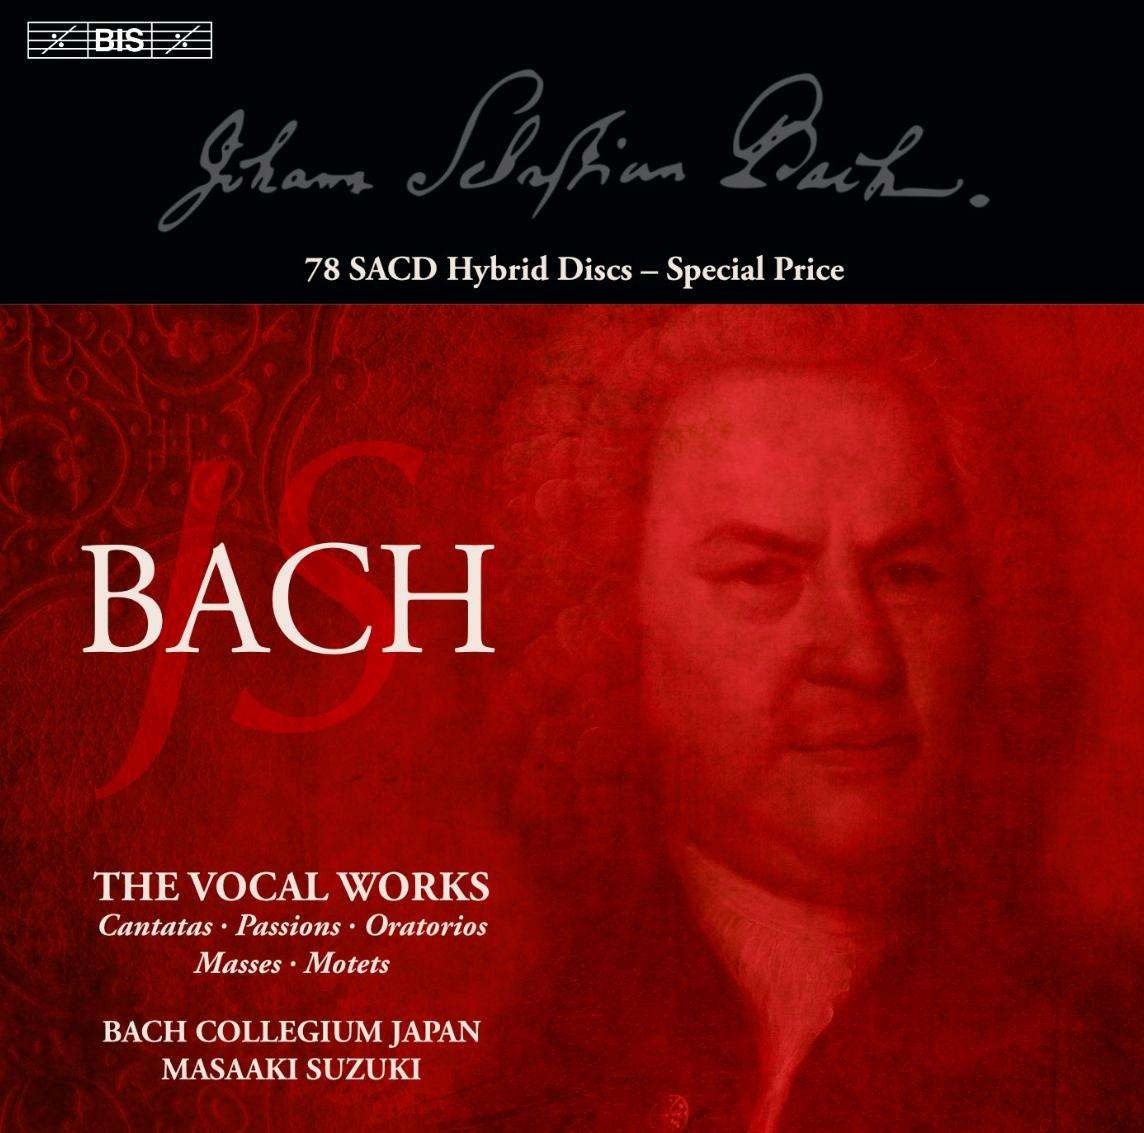 CD Shop - BACH COLLEGIUM JAPAN Johann Sebastian Bach: the Vocal Works: Cantatas - Passions - Oratorios - Masses - Motets